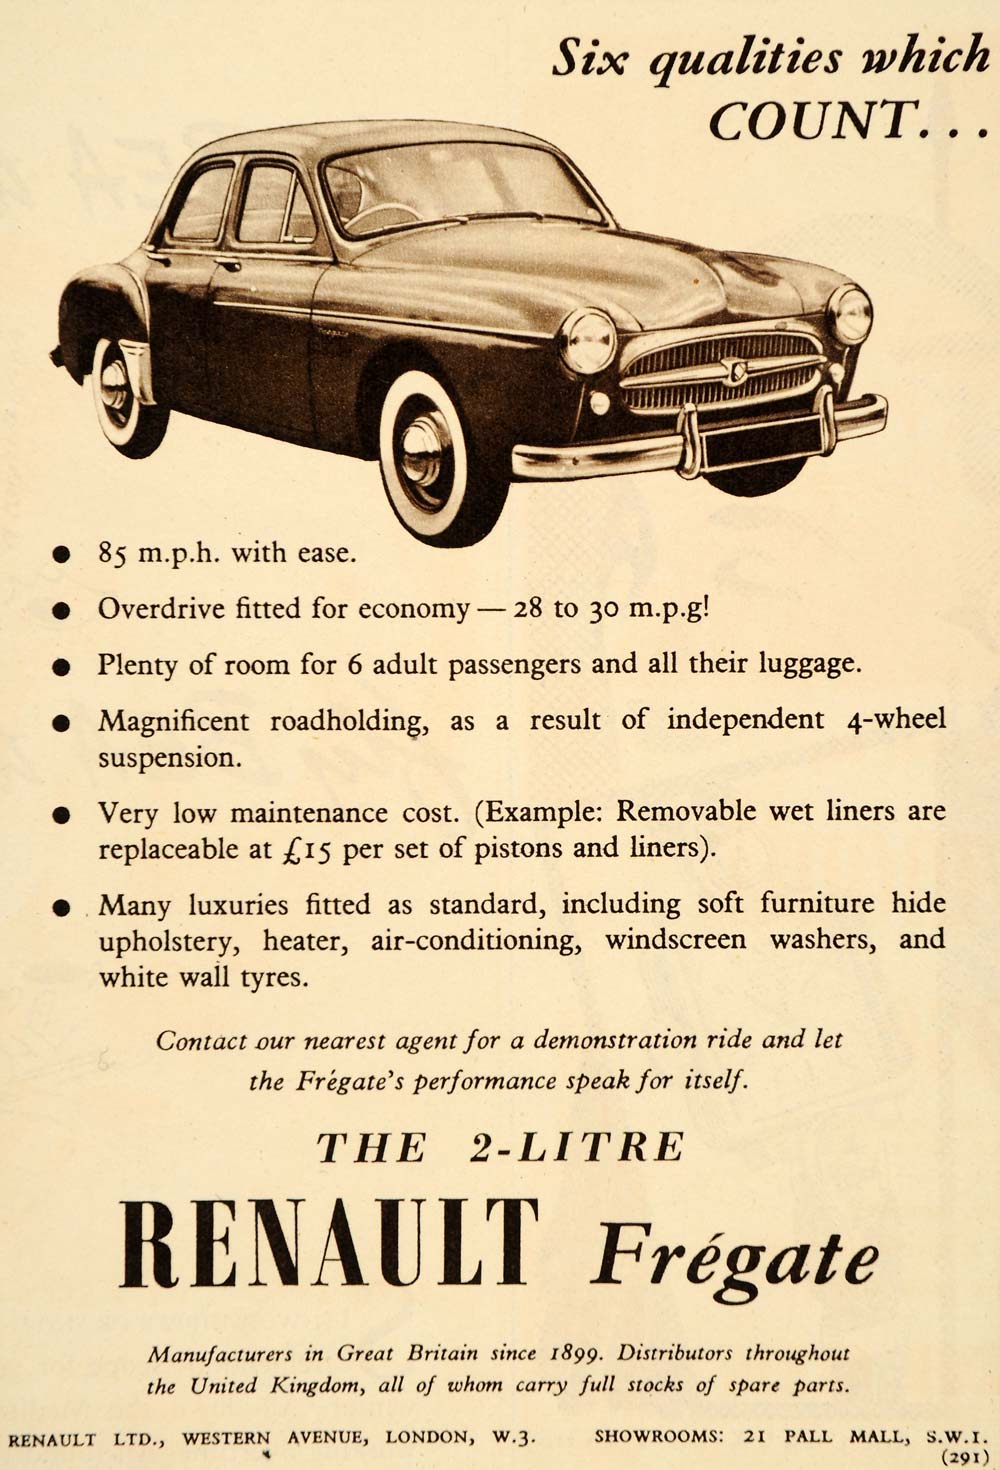 1955 Ad Renault Fregate 6 Passenger French Automobile - ORIGINAL ADVERTISING LN1